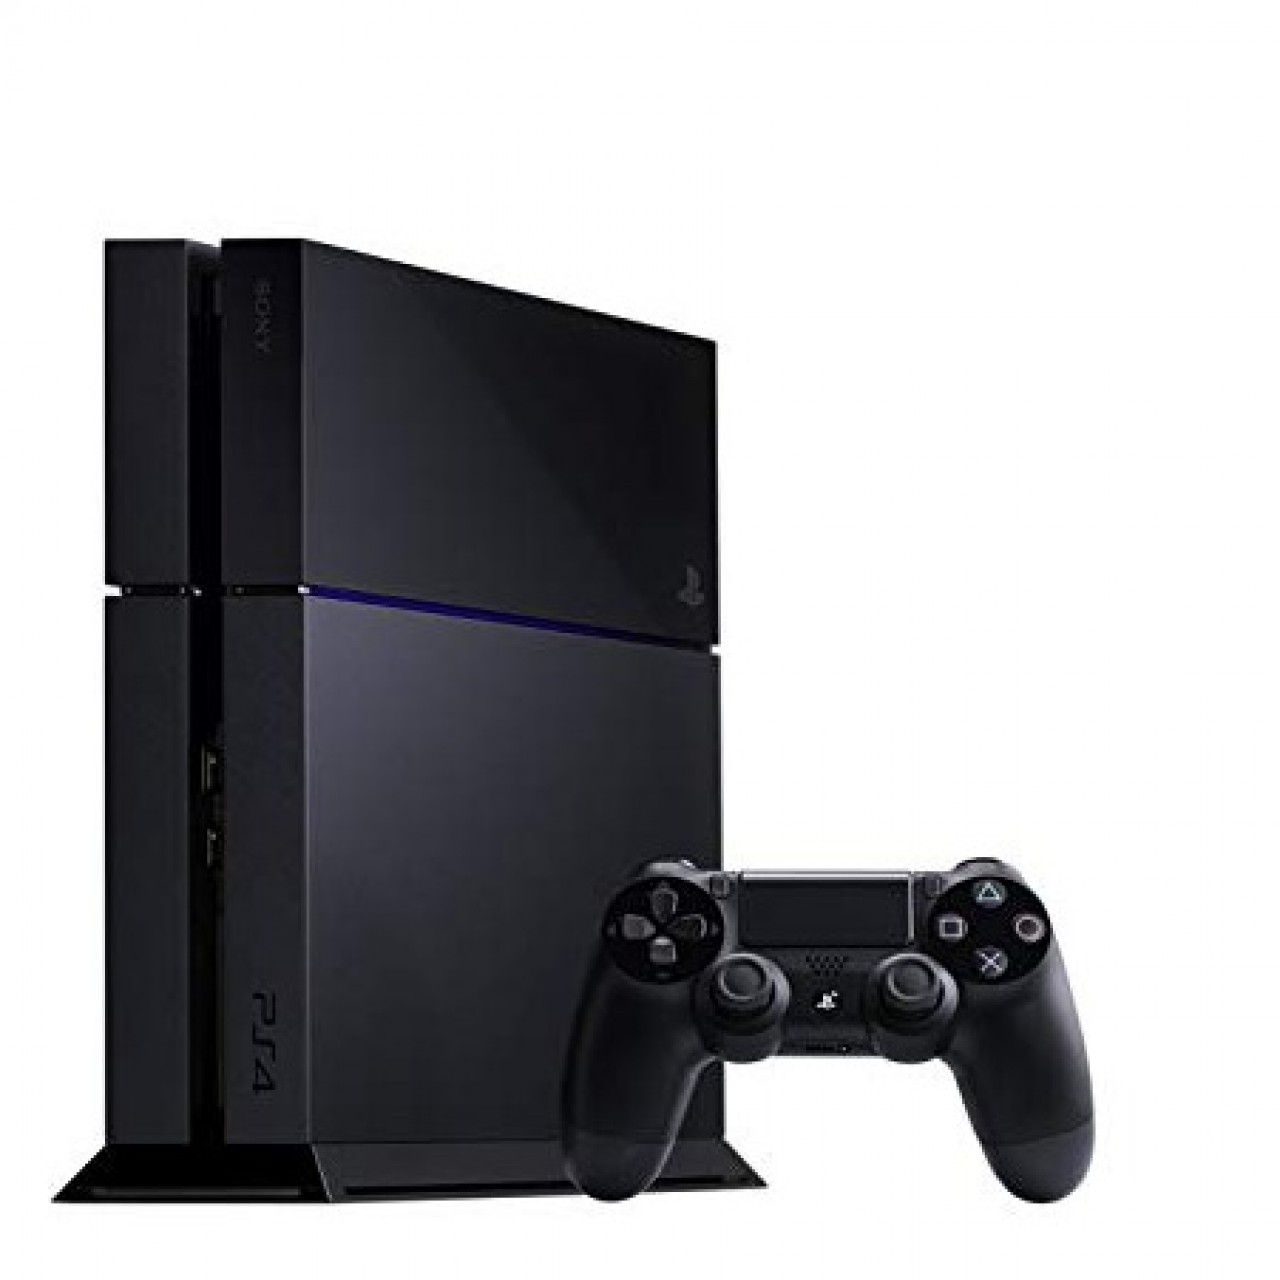 5. Sony 500GB PlayStation 4 – Black Color